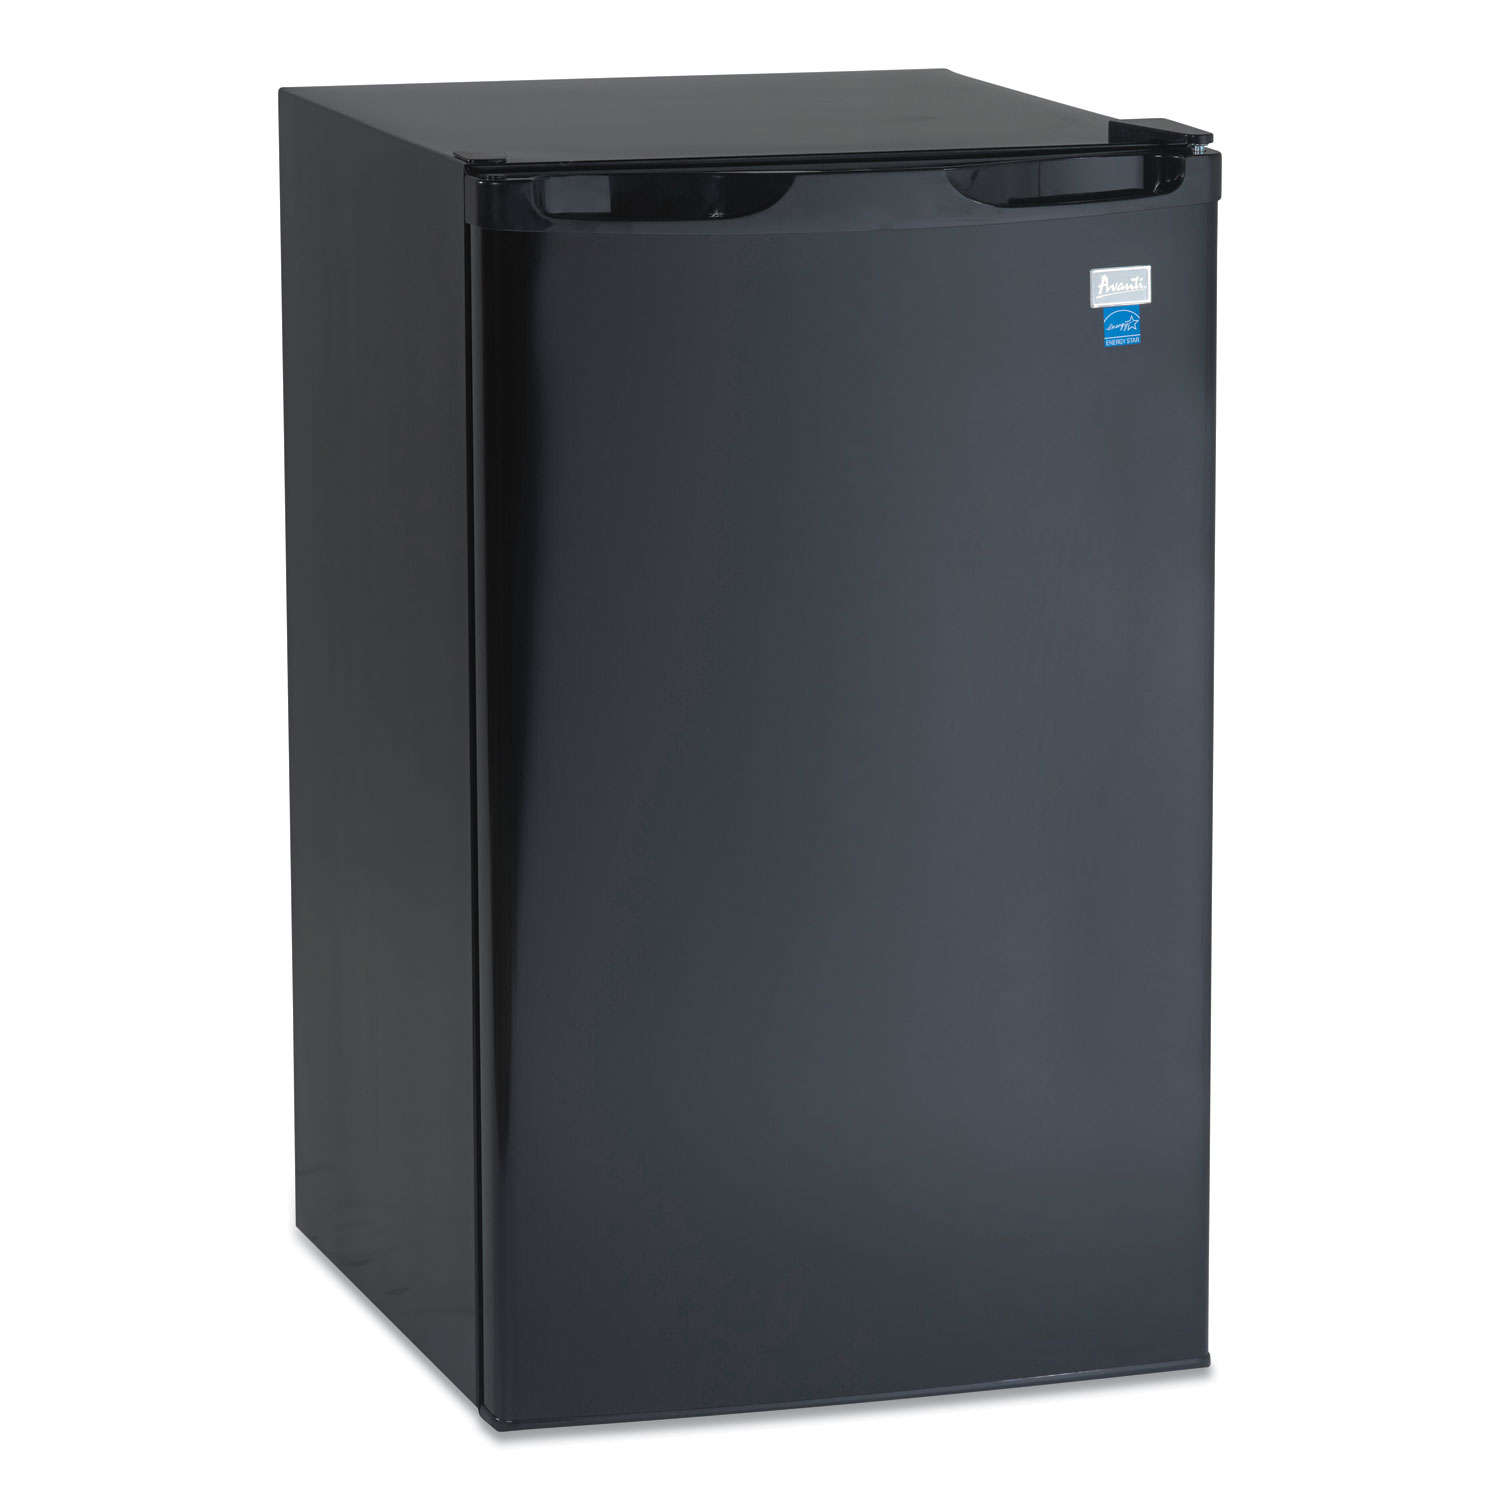  Avanti RM4416B 4.4 Cu. Ft. Counter Height Refrigerator, Black (AVA1169657) 